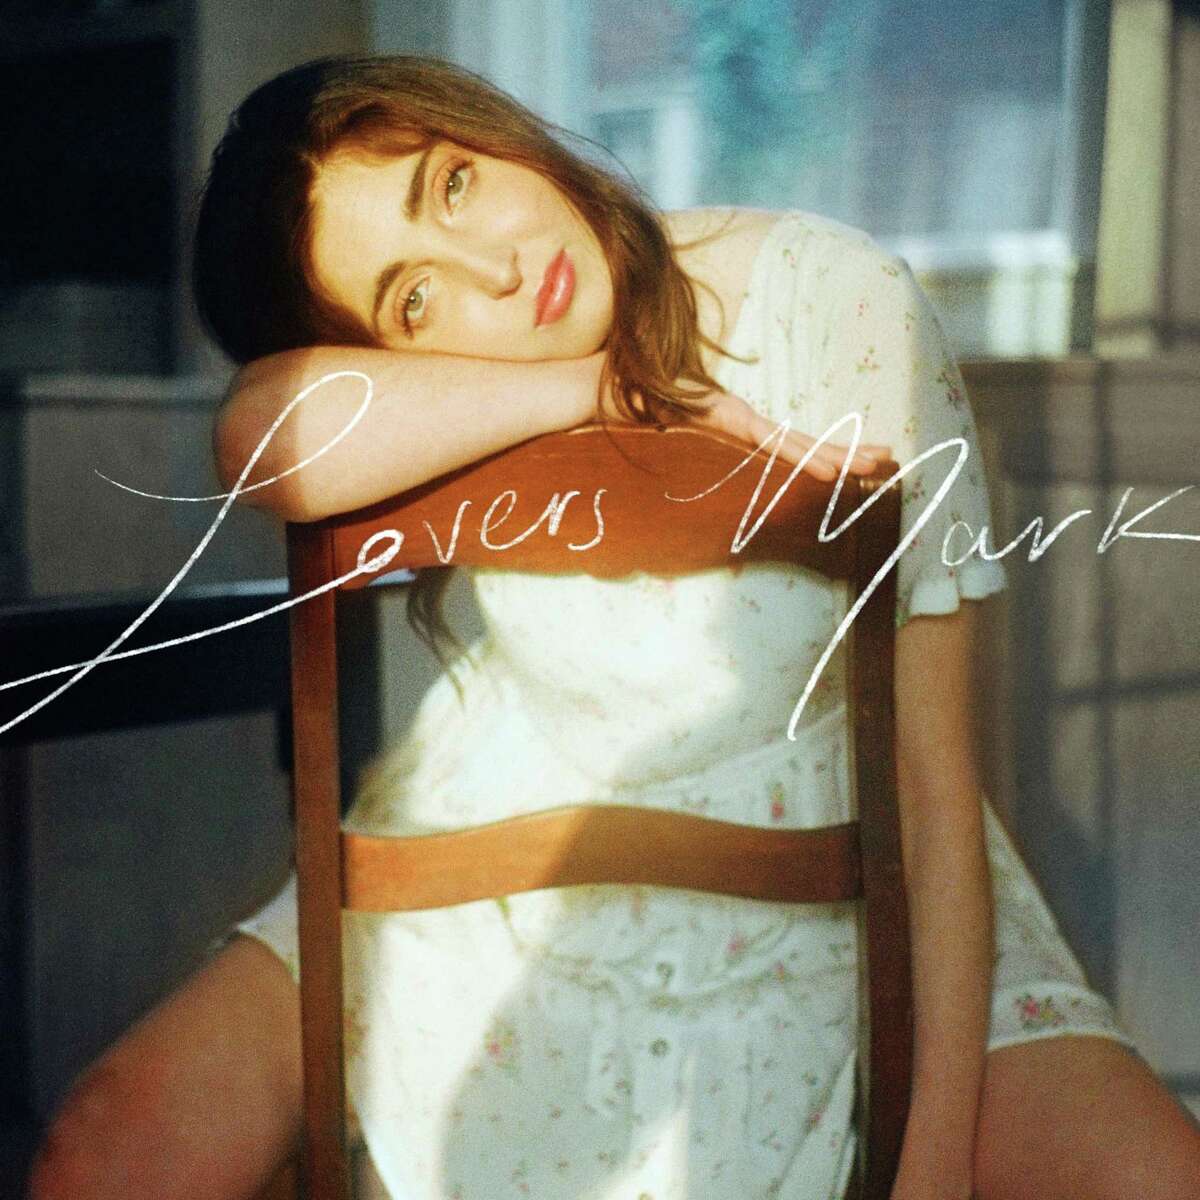 Greenwich native Zoe Clark released her debut EP, "Lovers Mark," April 17, 2020.